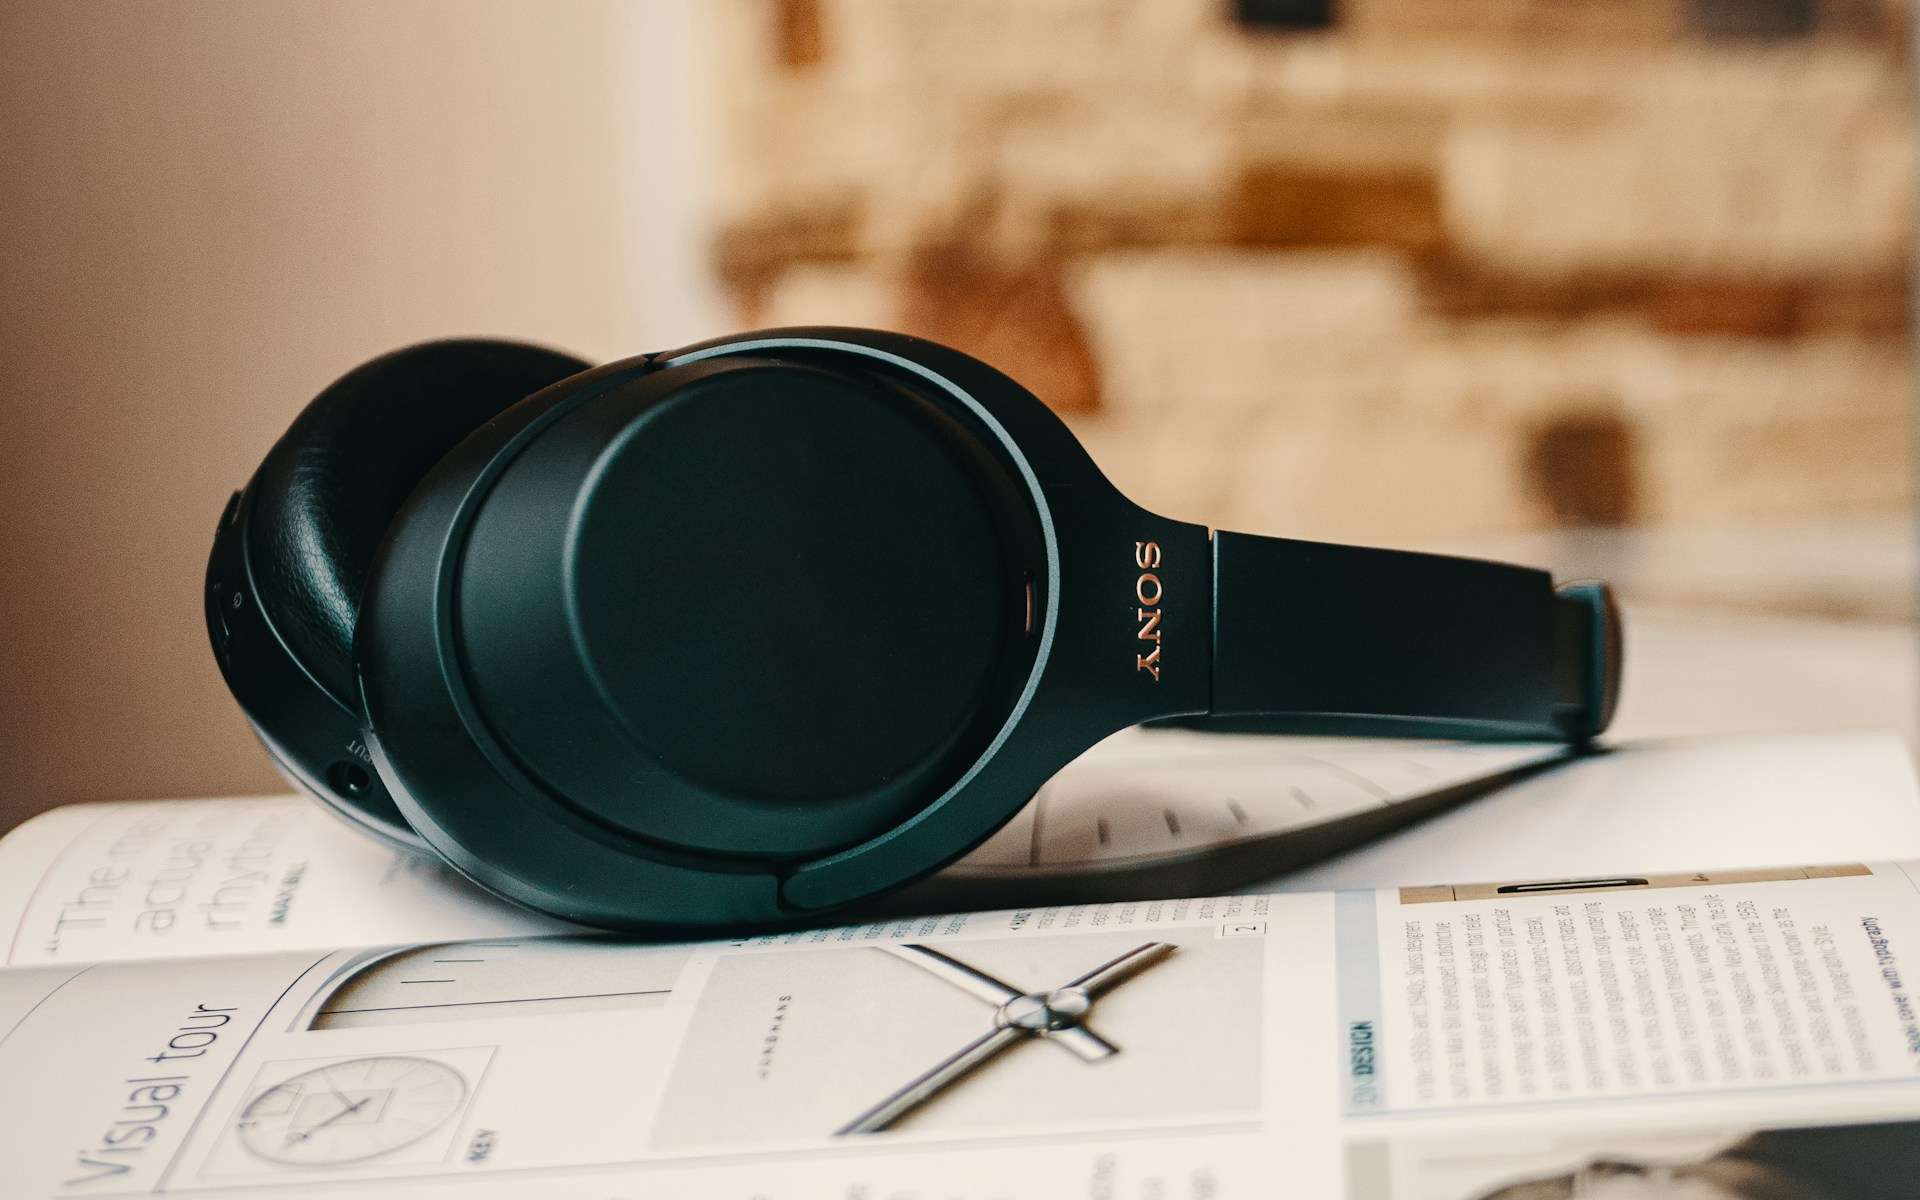 How to Reset Sony WH-1000XM3 Headphones: Unlock the Potential